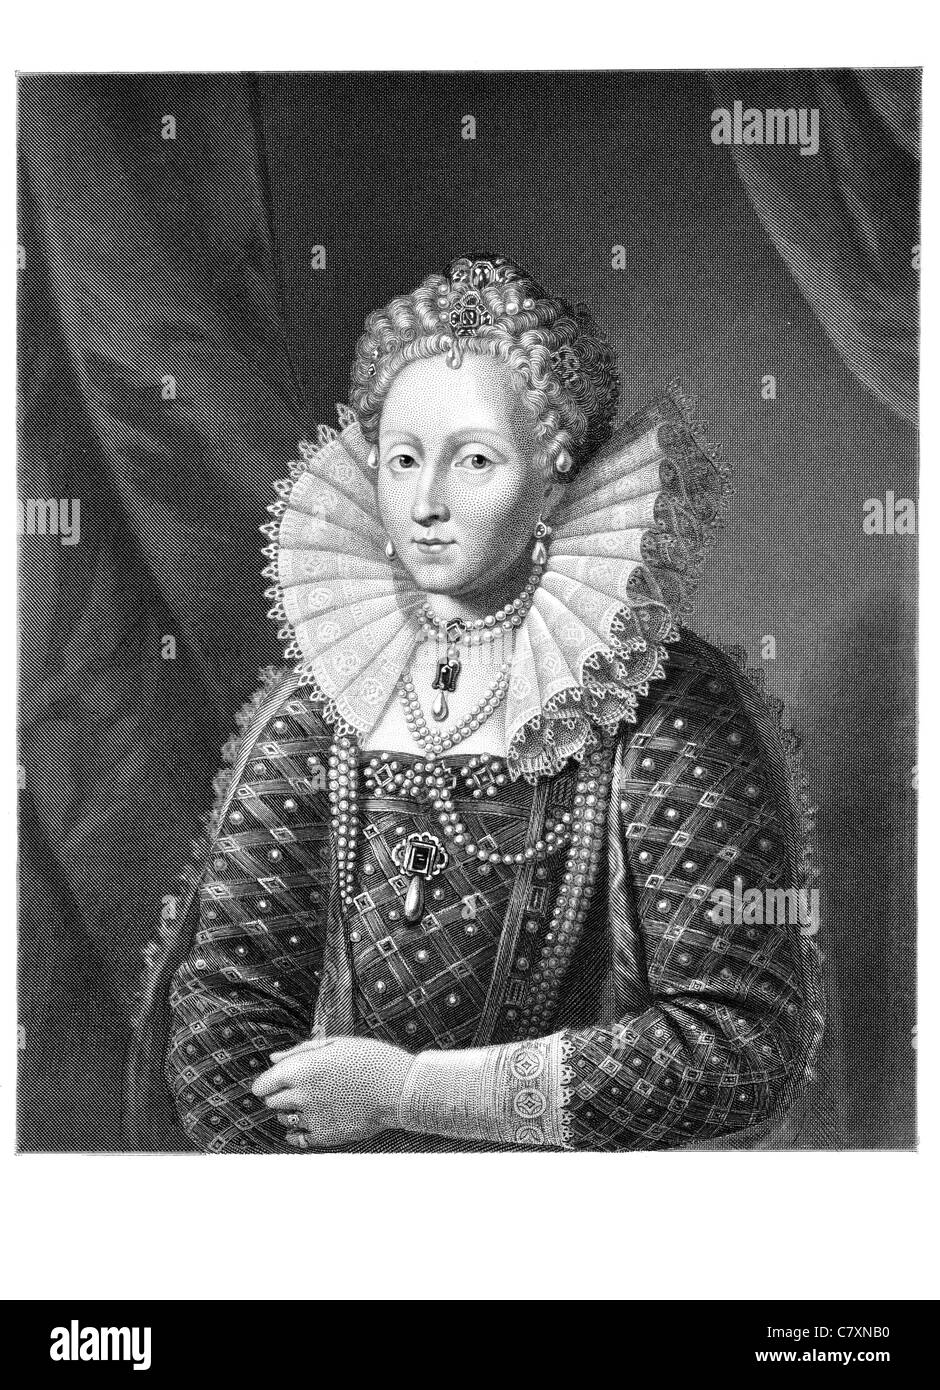 Elizabeth I 1533 1603 regnant Virgin Queen Gloriana Good Queen Bess Tudor dynasty regal royal queenly princely imperial Stock Photo